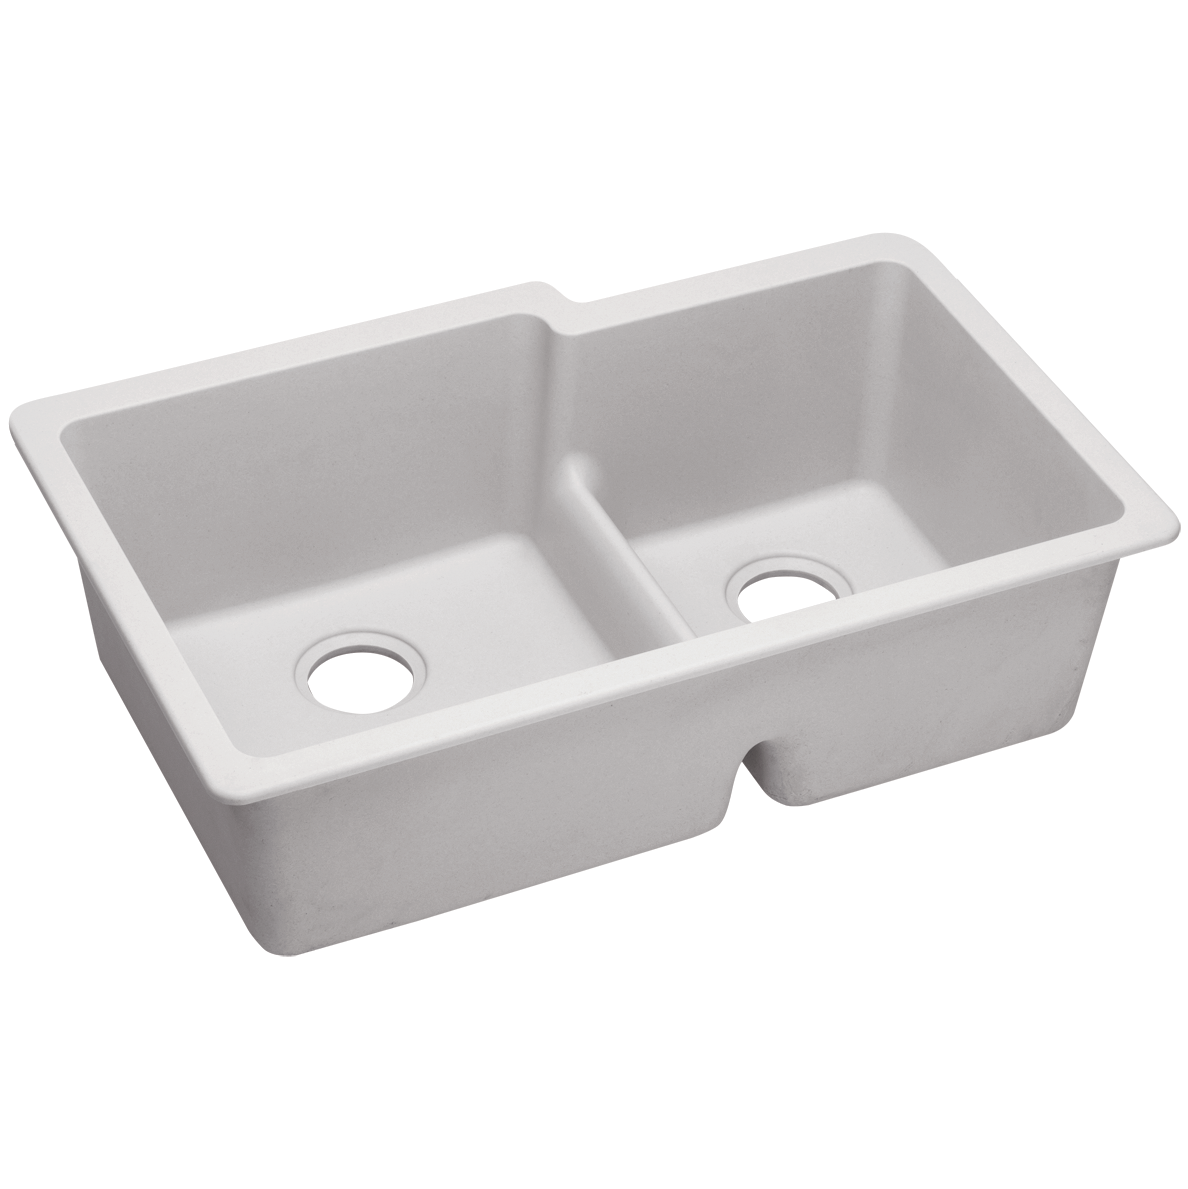 Quartz Classic 33x20-1/2x9-1/2" Double Bowl Sink White